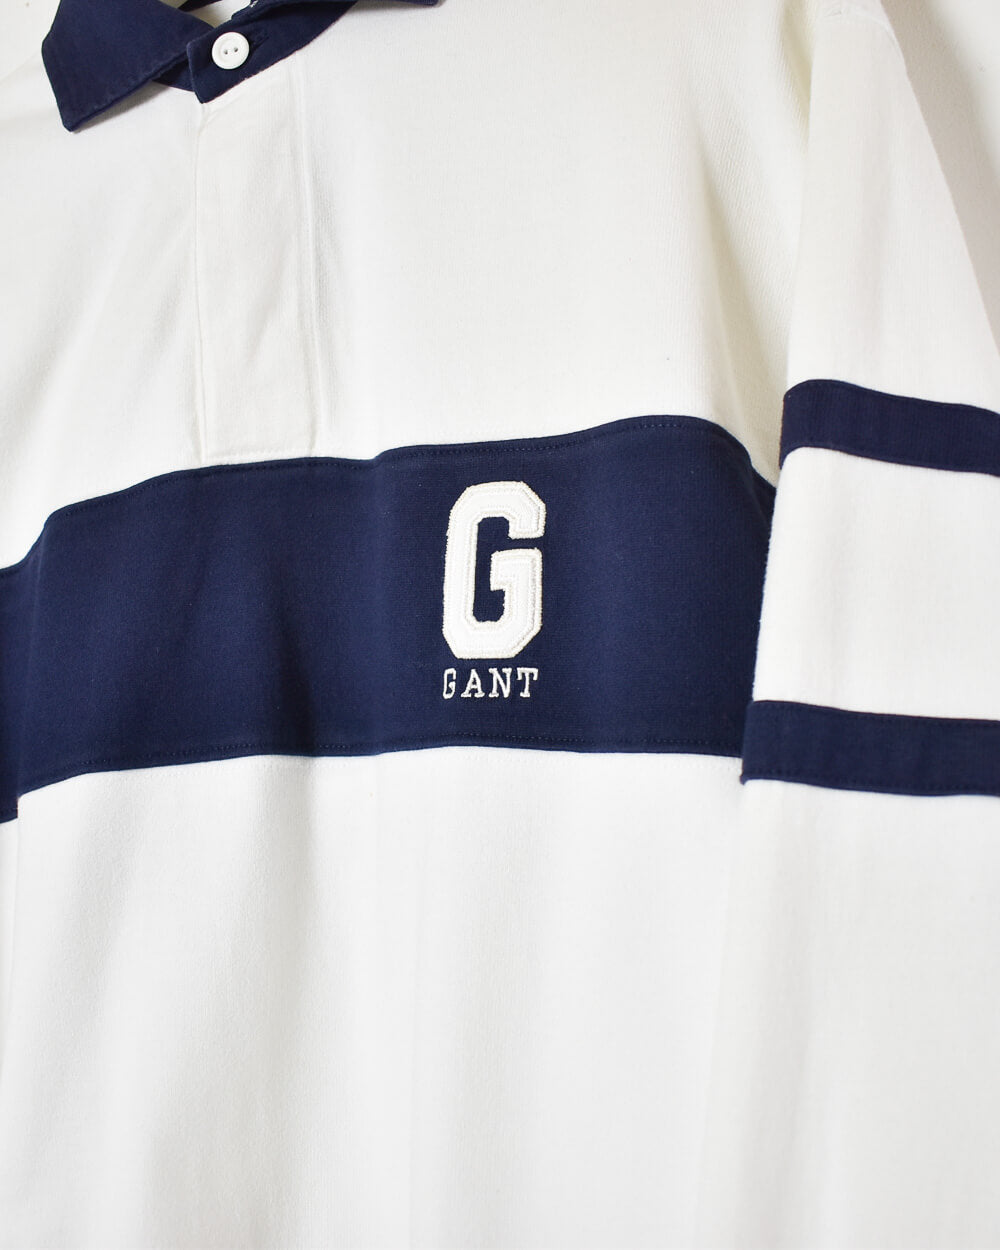 White Gant Rugby Shirt - Large